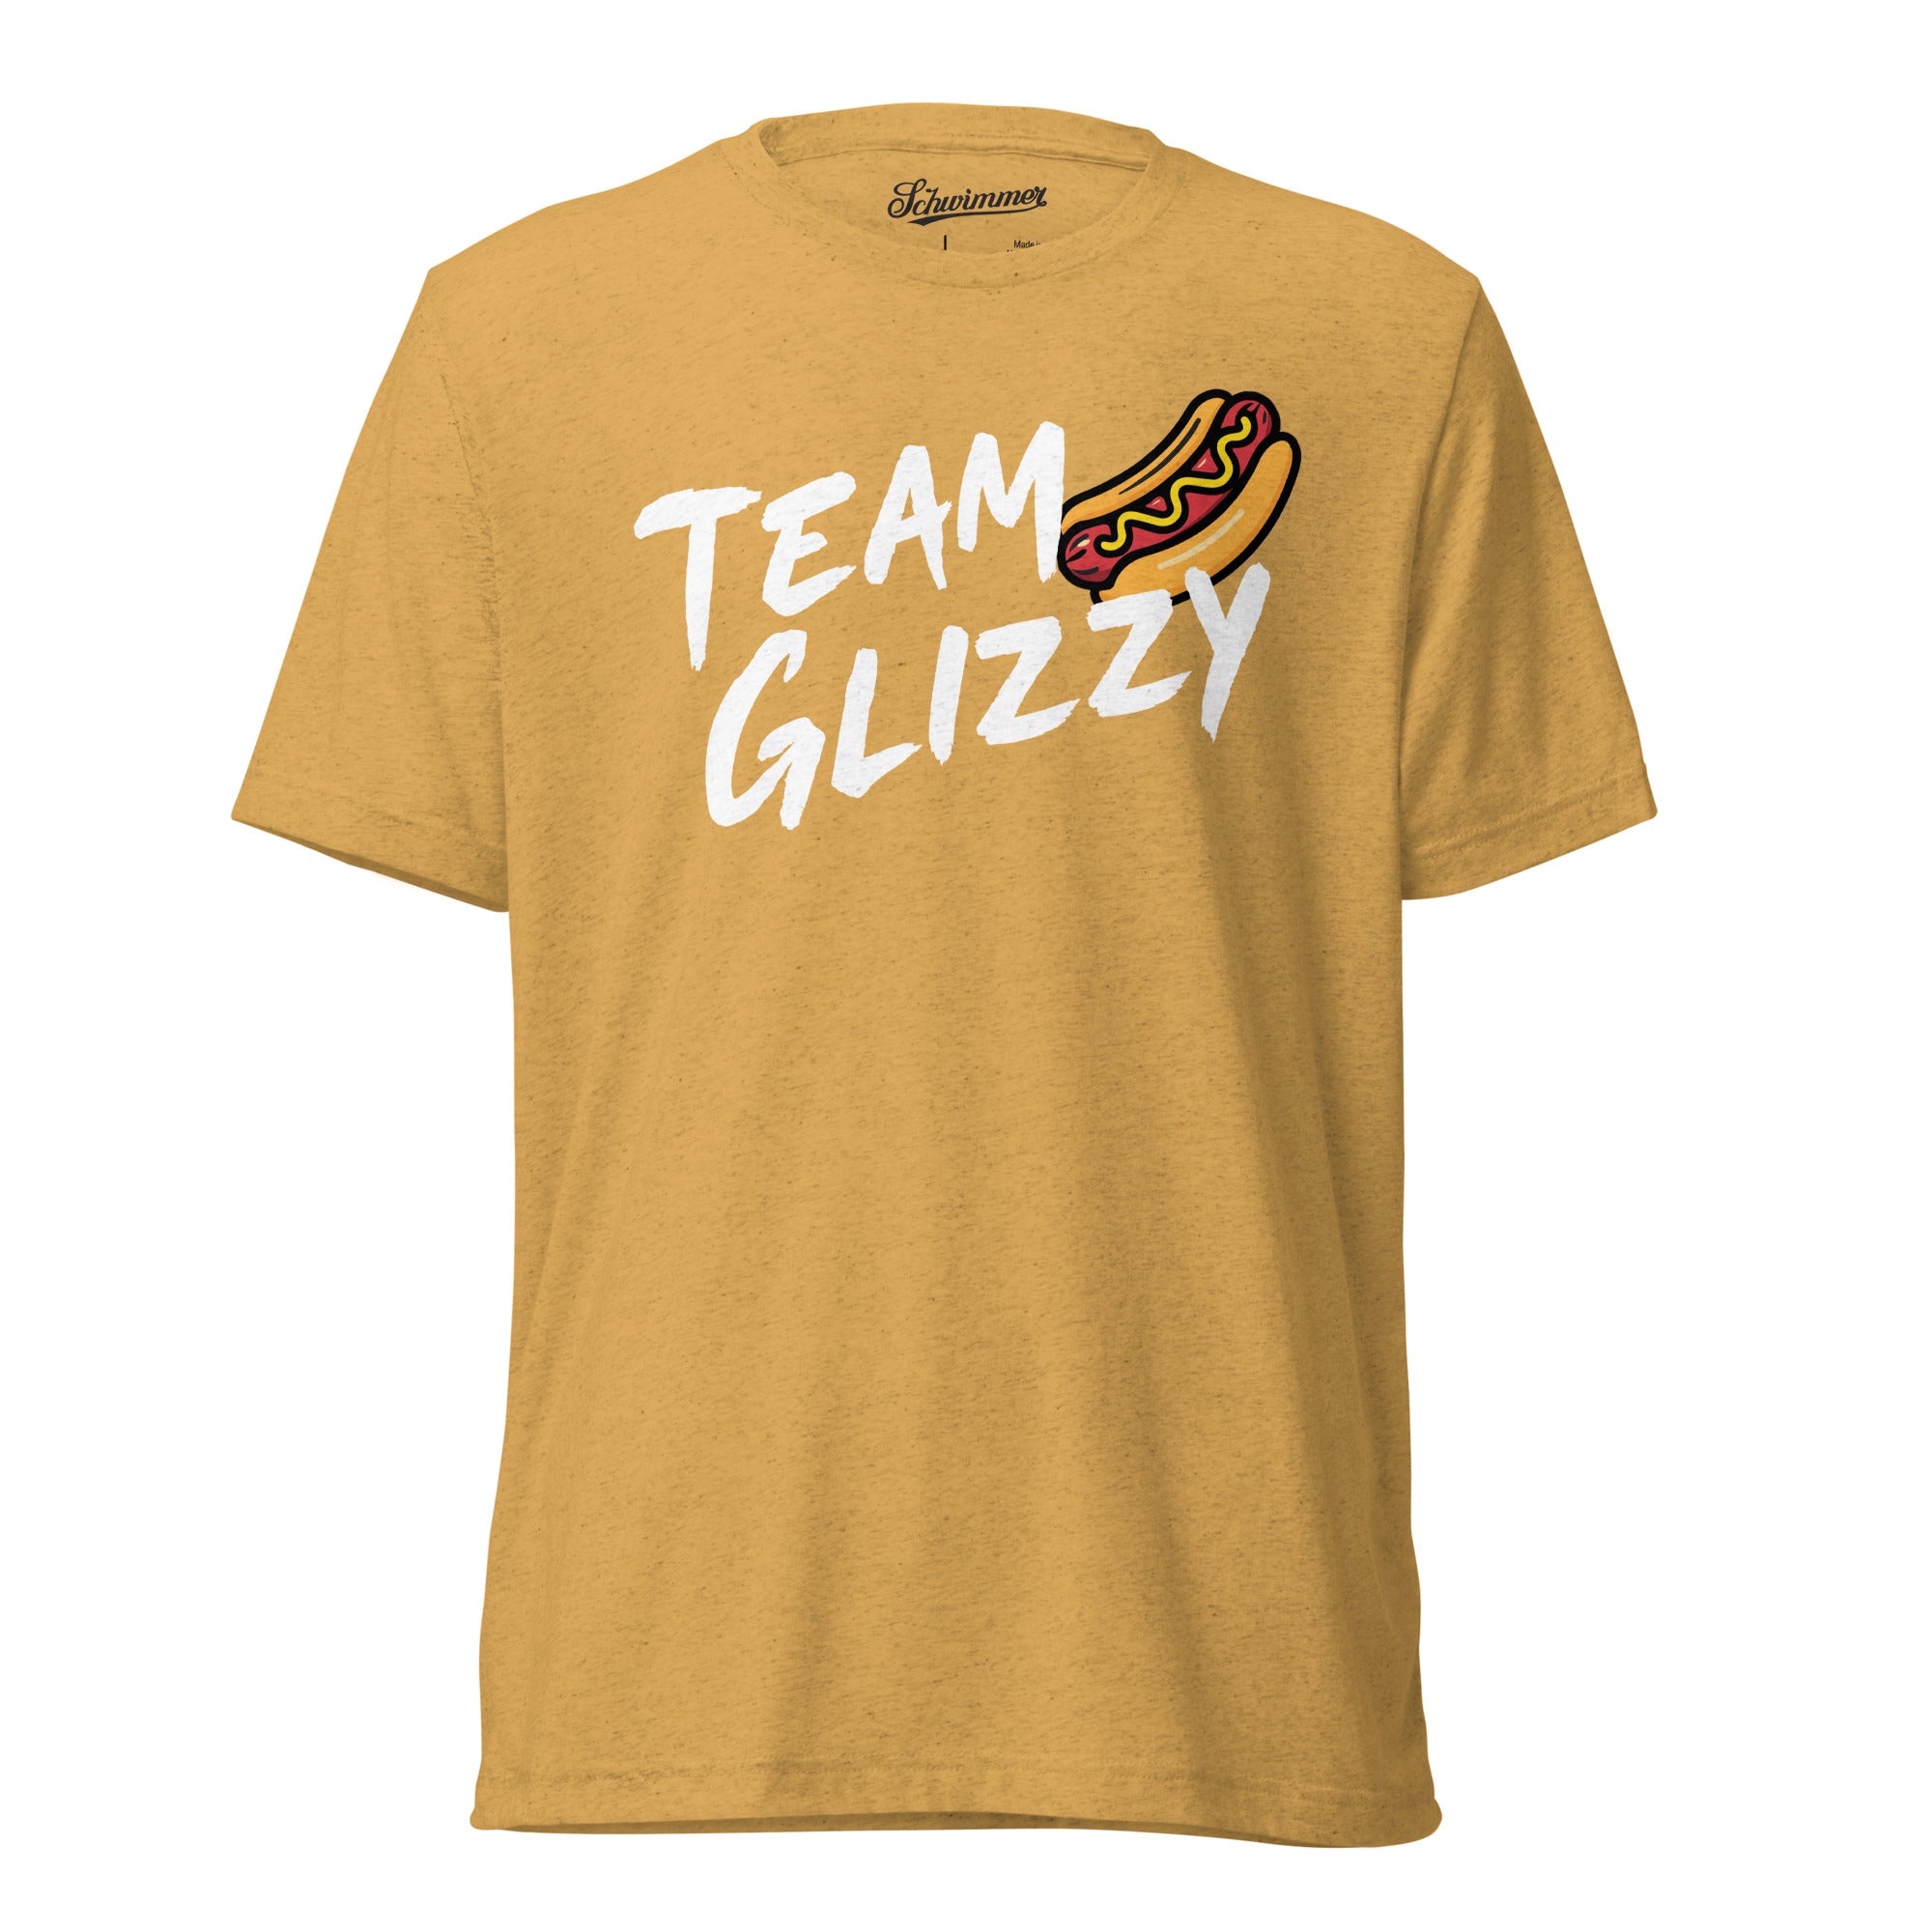 Glizzy t-shirt